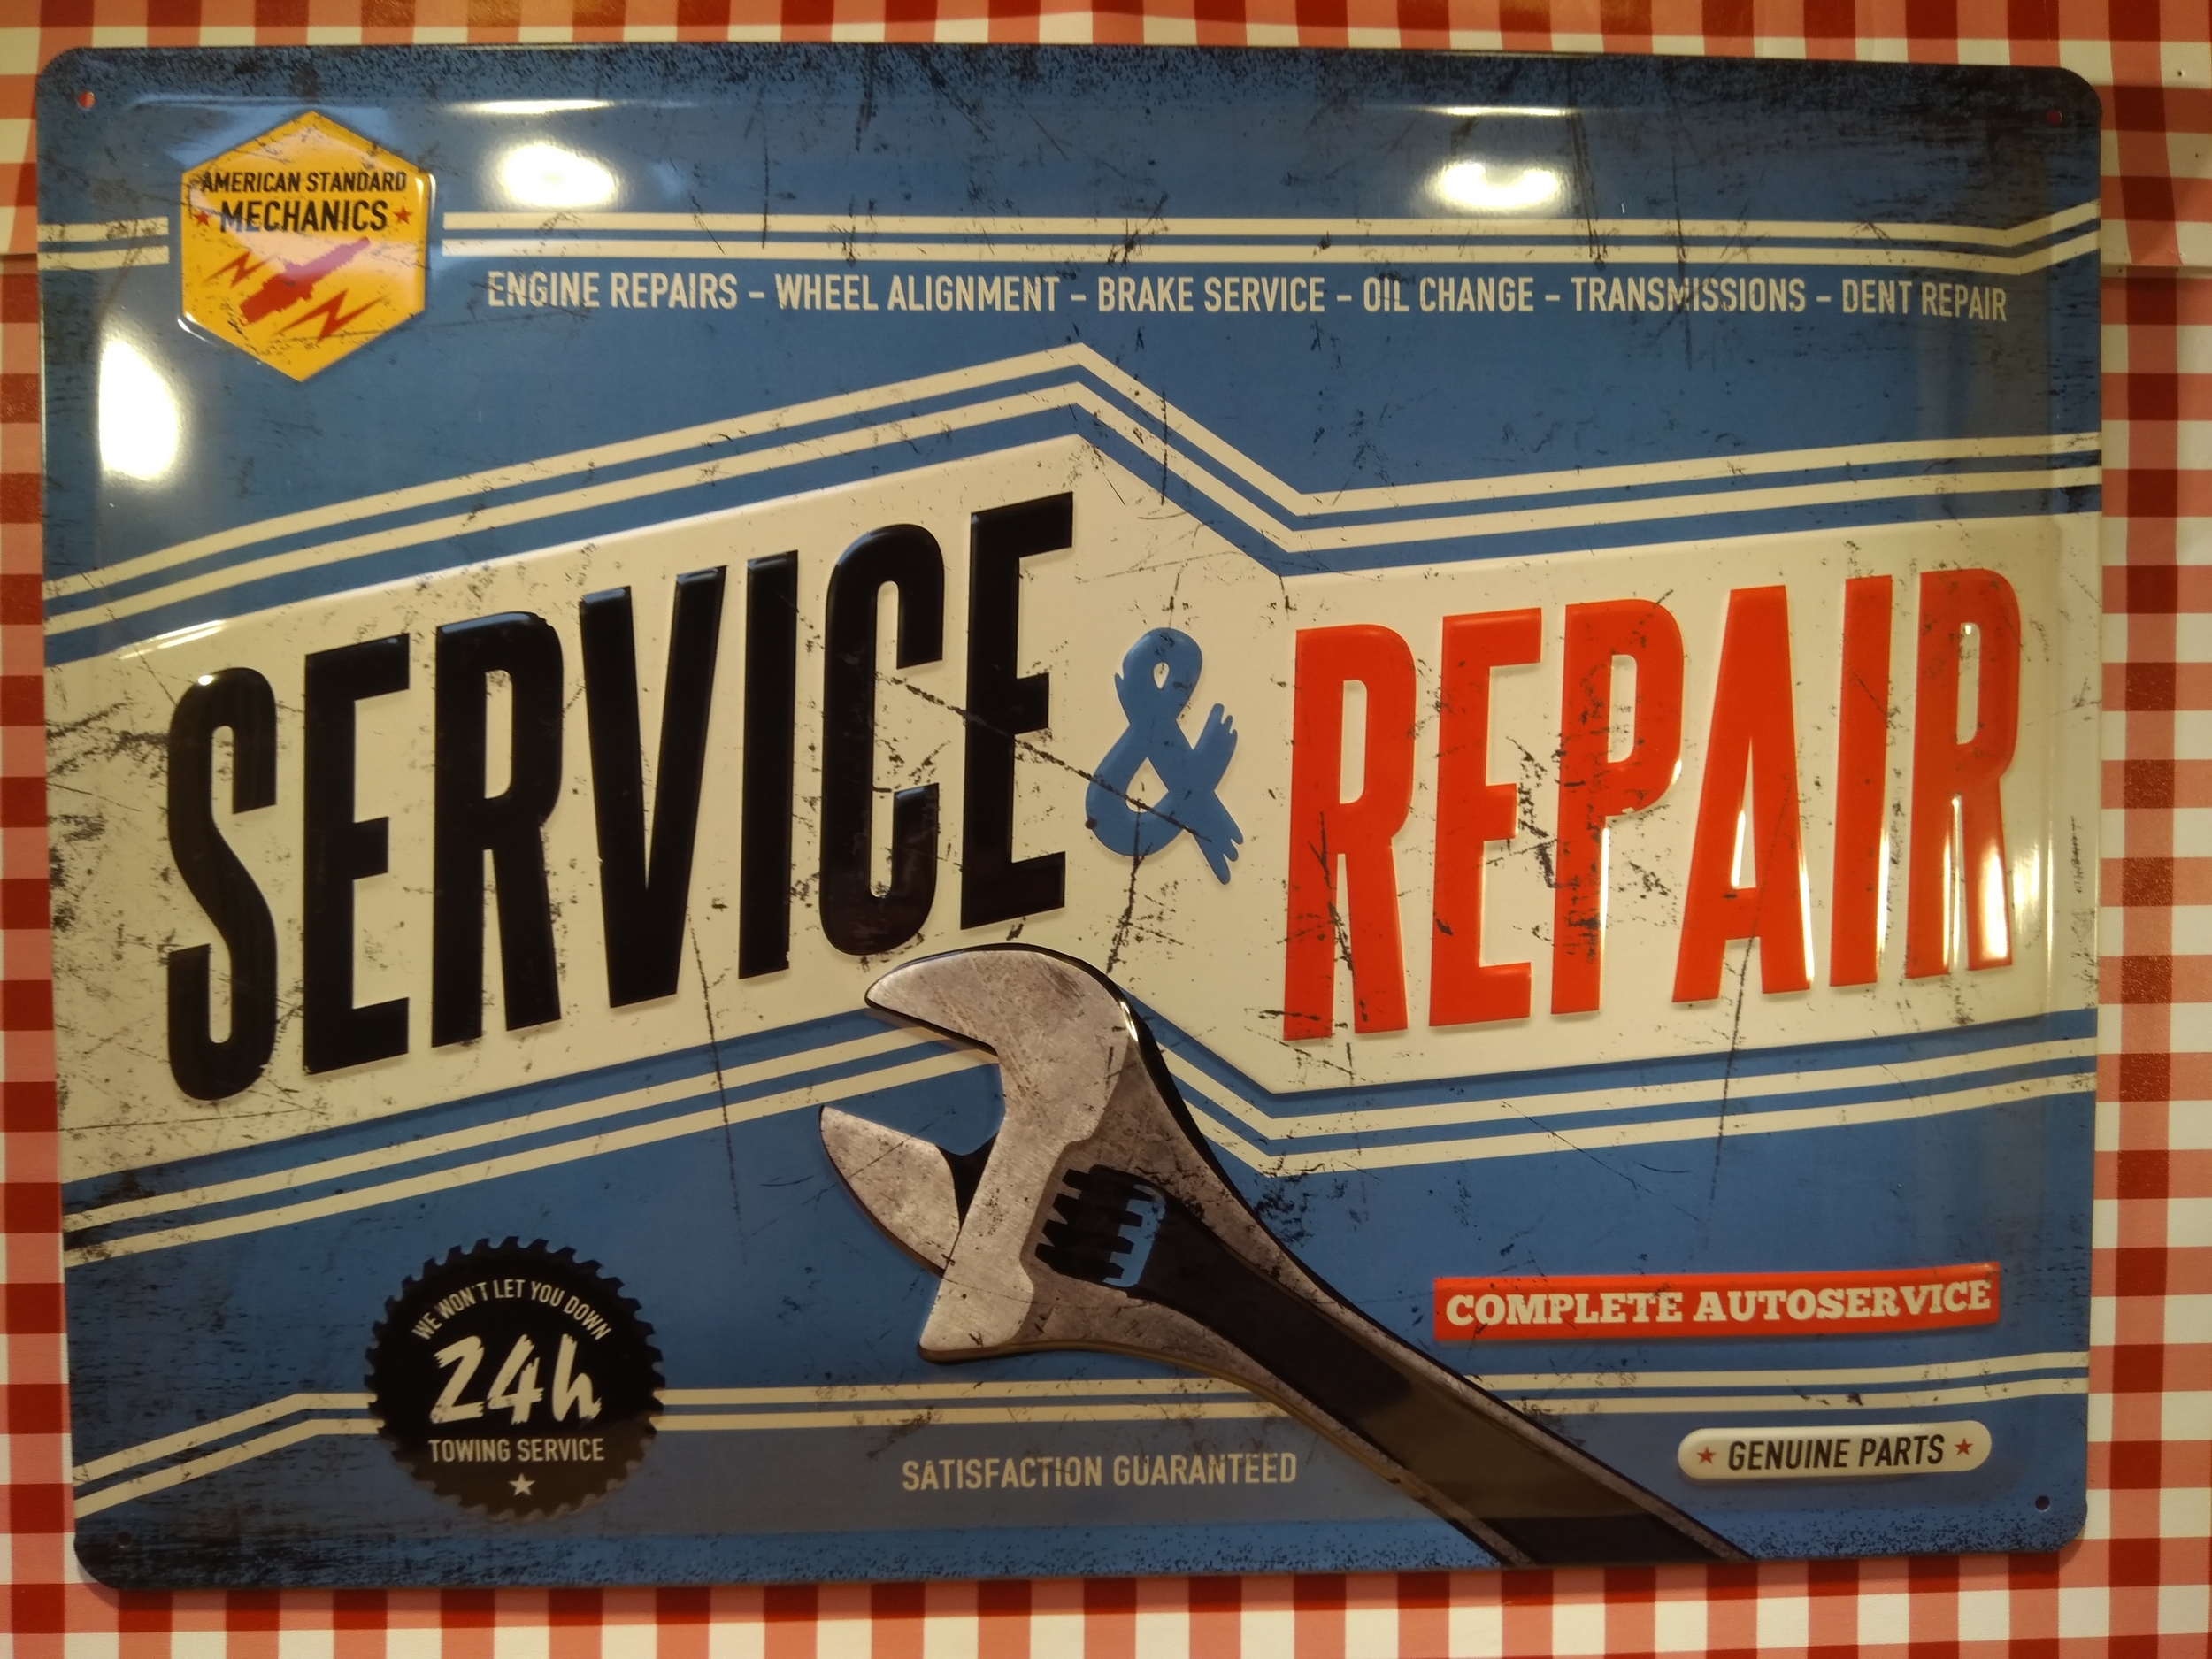 Plaque metal Pin-Up Garage Service Repair vieilli France